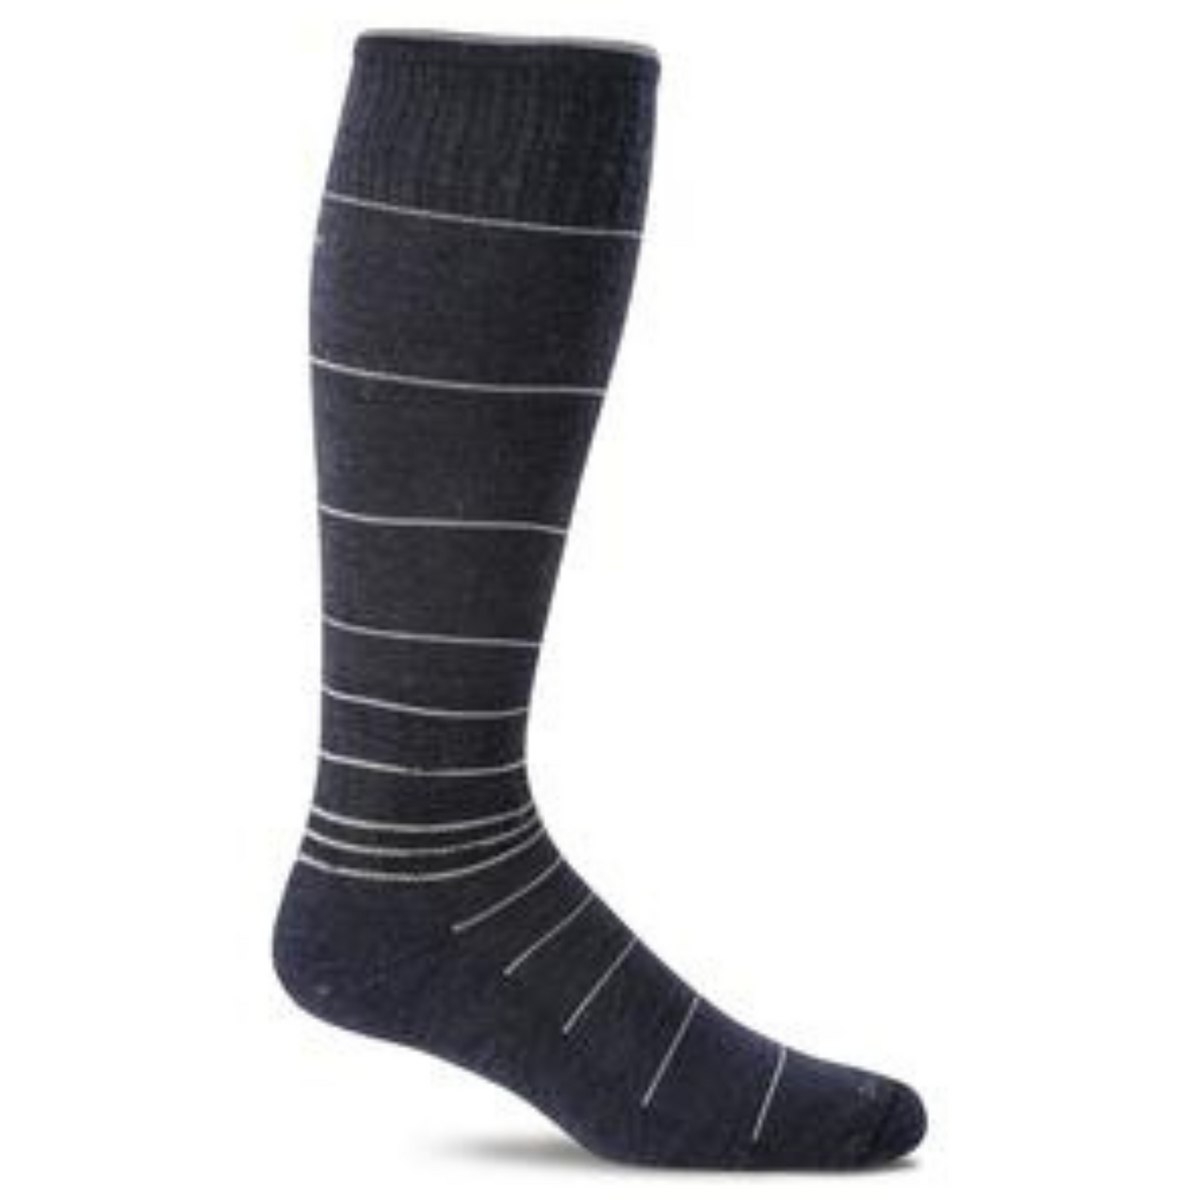 Sockwell Circulator moderate graduated compression (15-20 mmHg) men&#39;s knee high sock in black